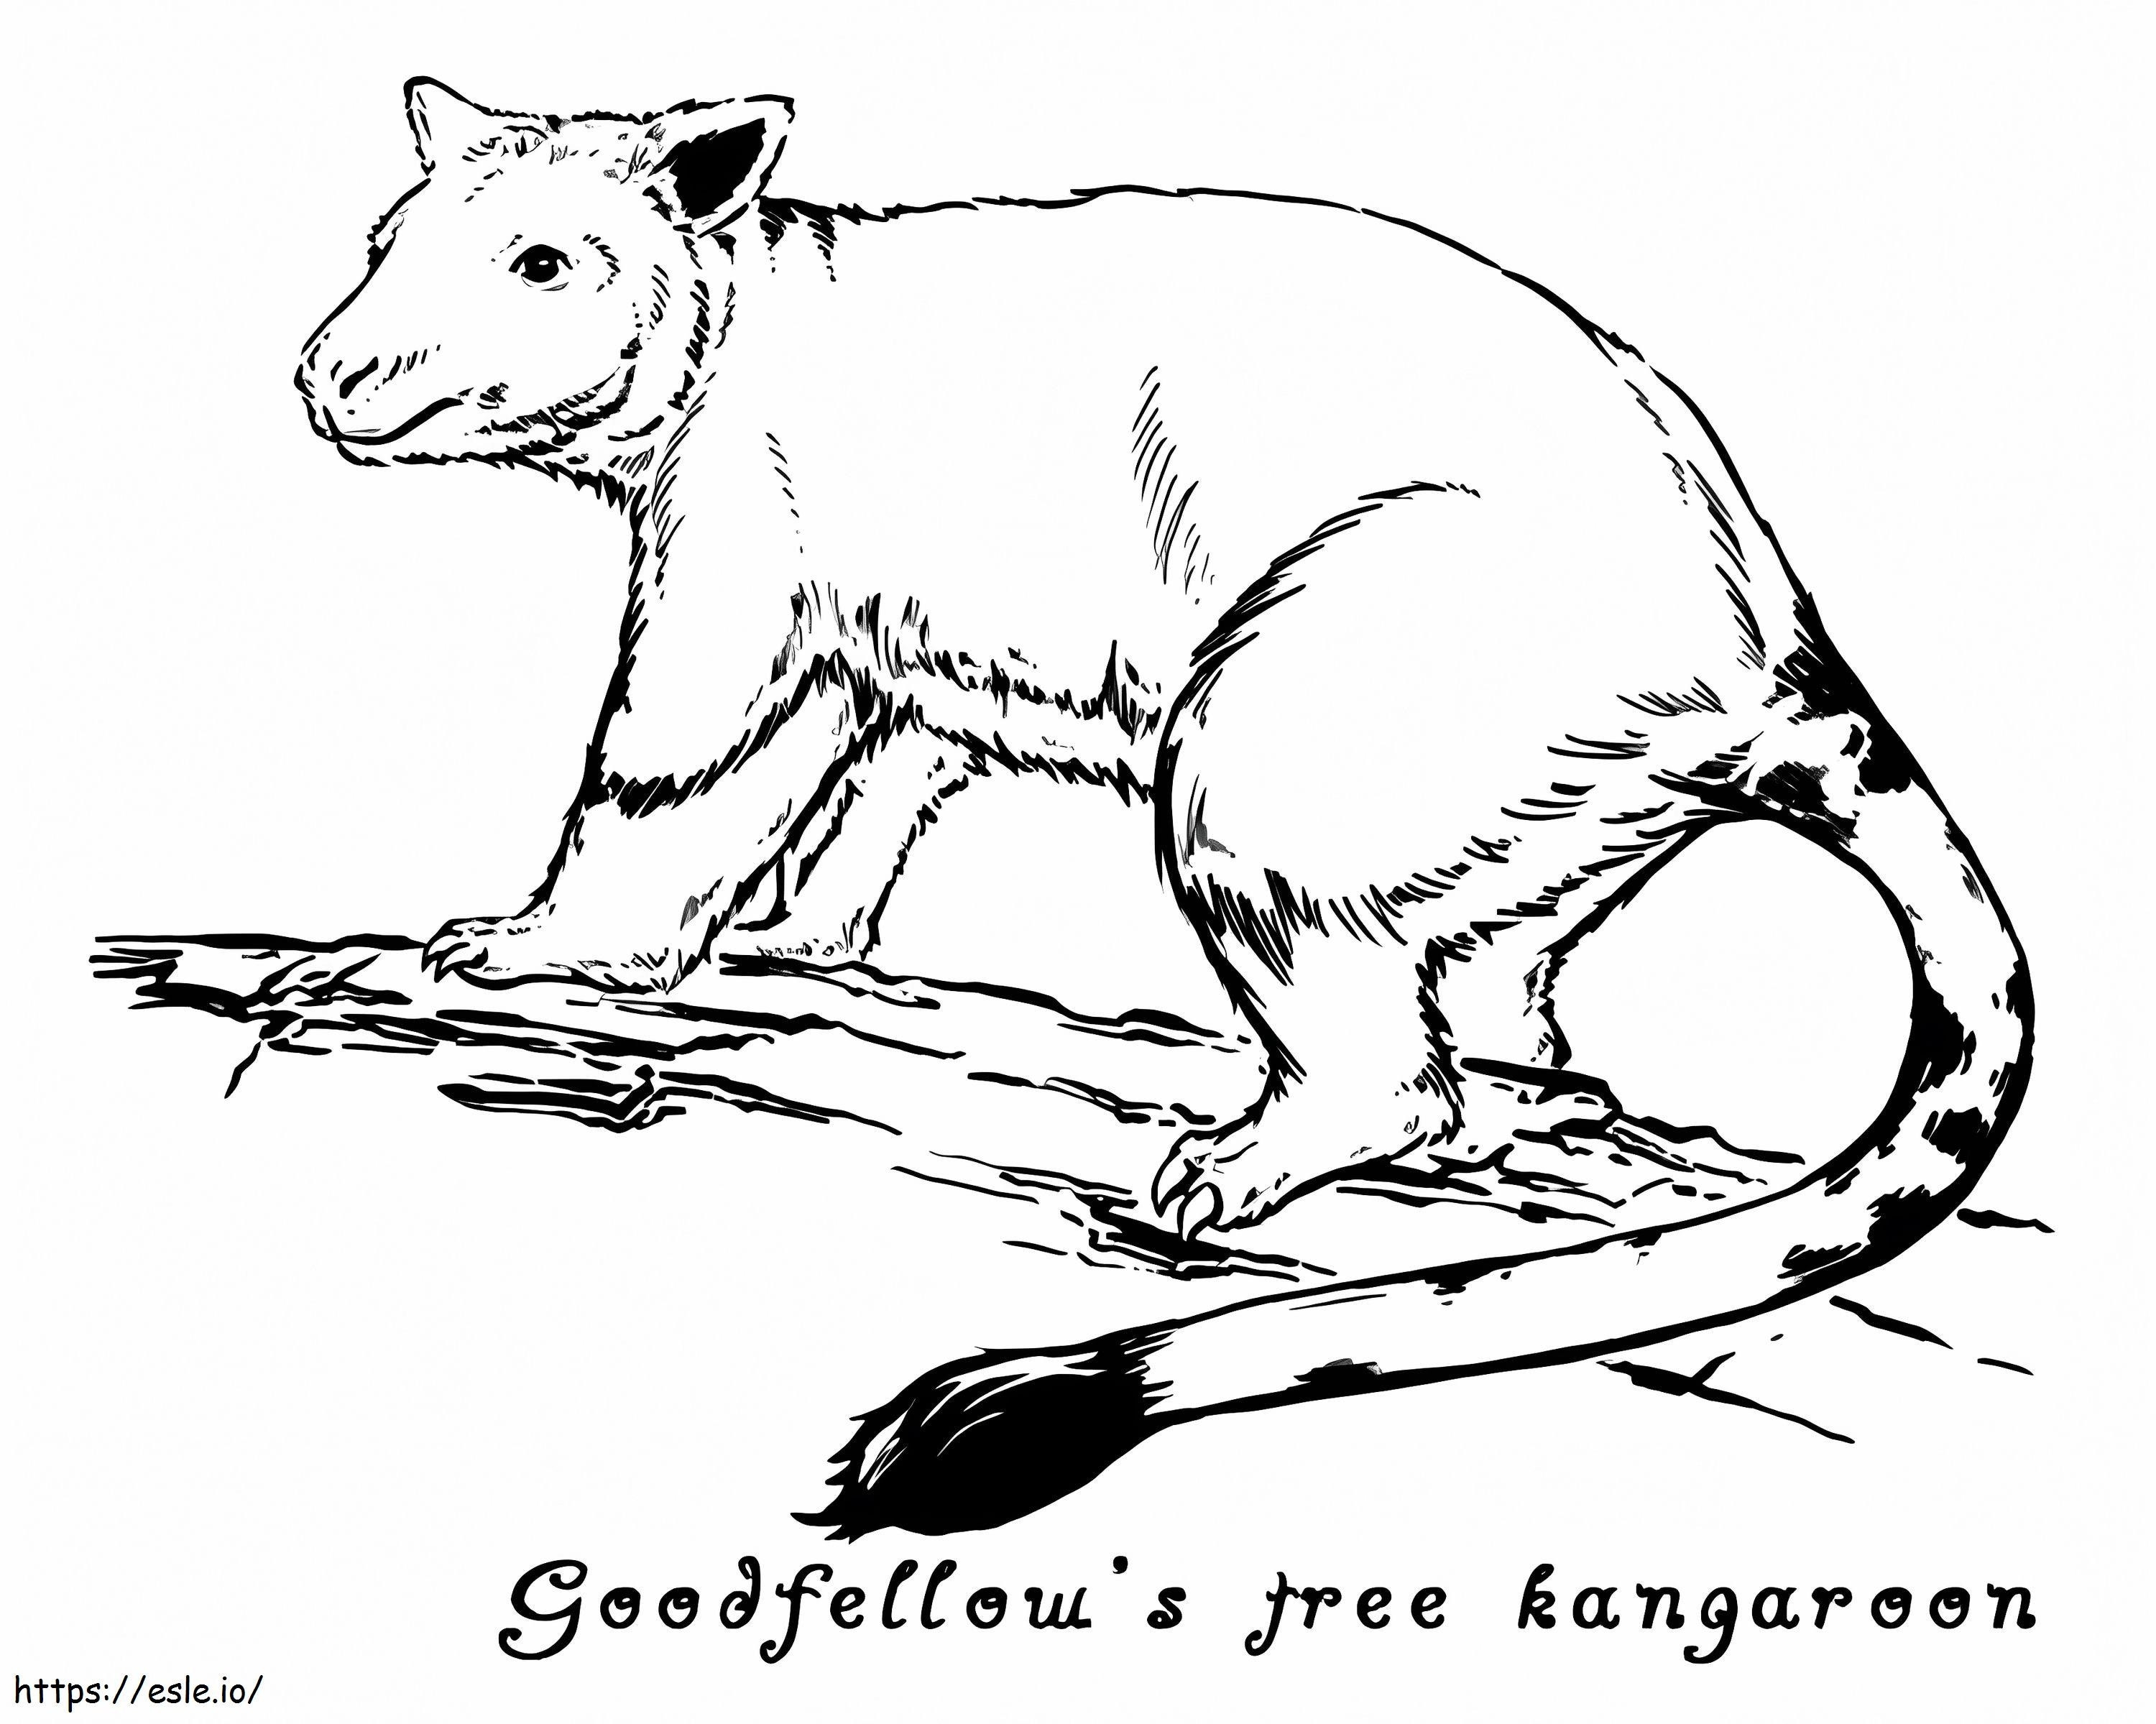 Goodfellows Tree Kangaroo 1 coloring page